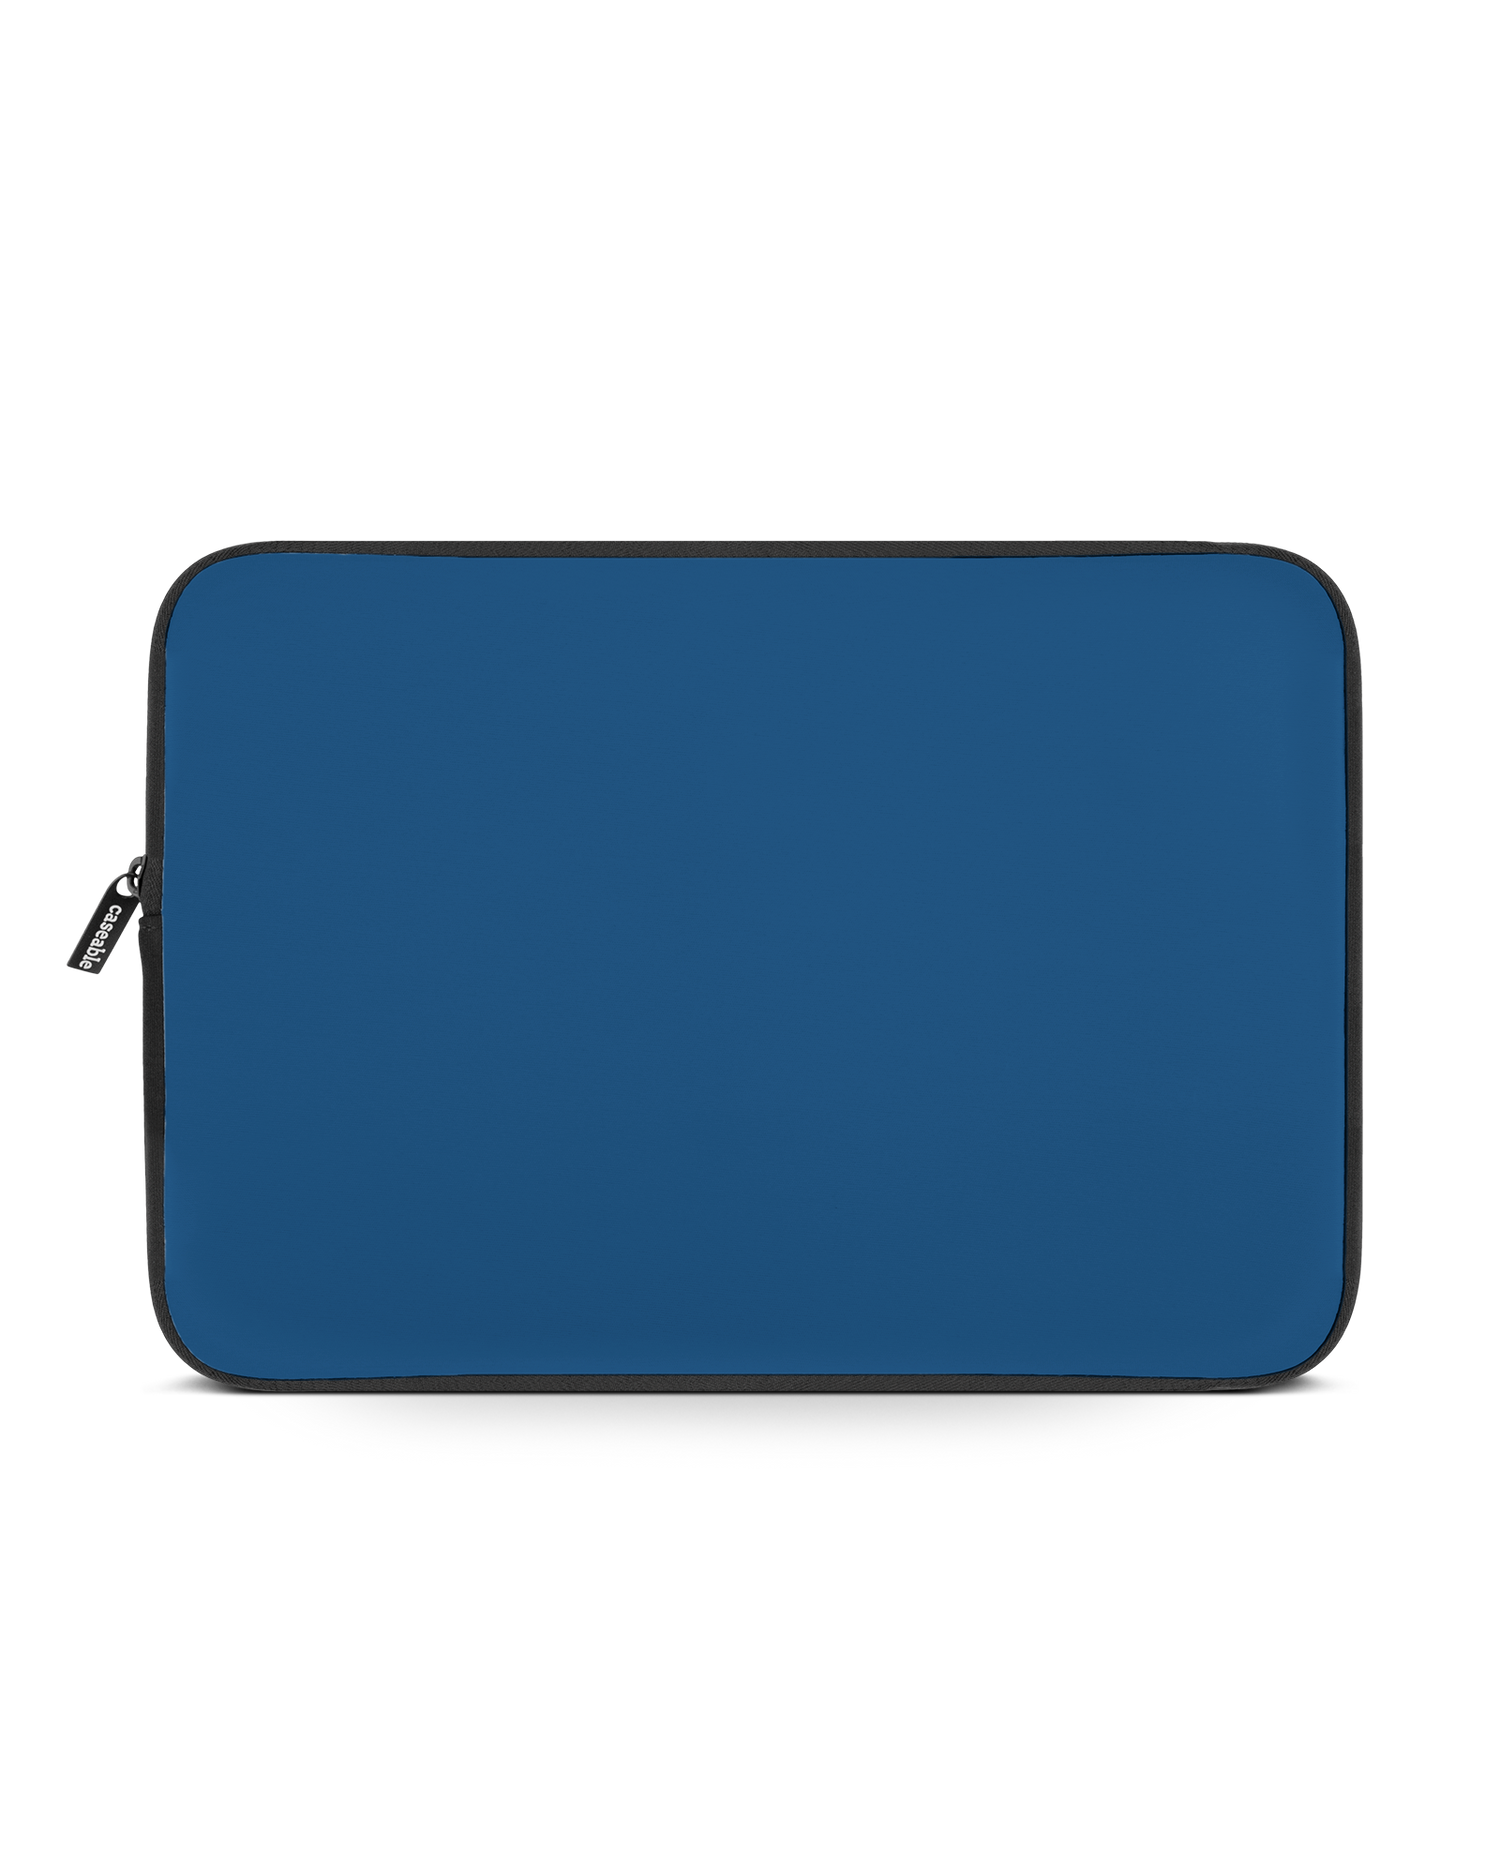 CLASSIC BLUE Laptop Case 15-16 inch: Front View